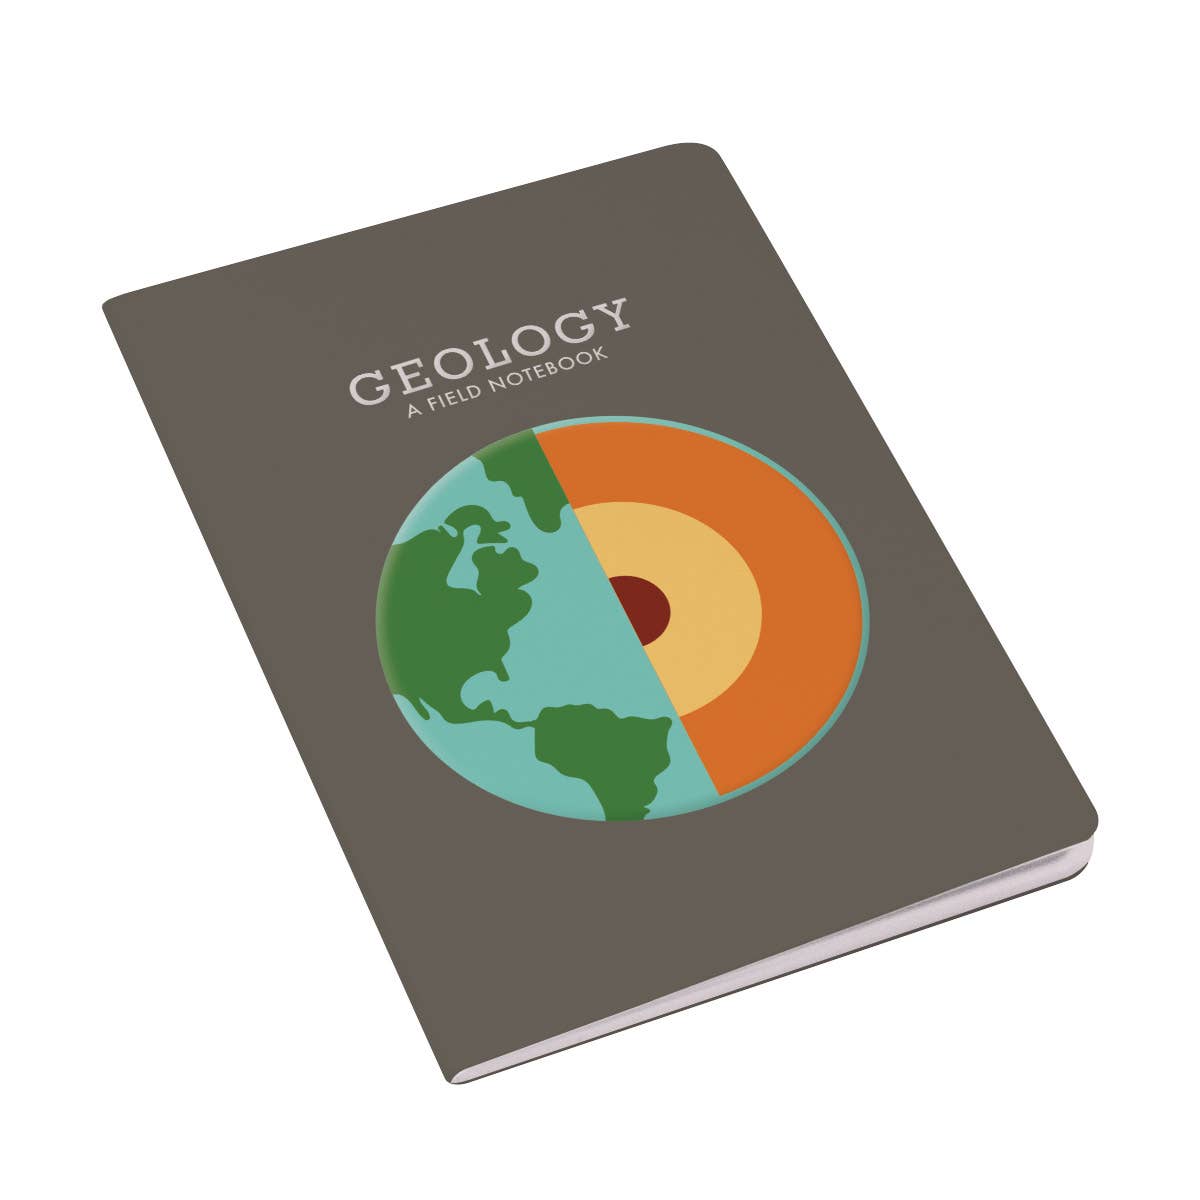 Geology: A Field (pocket) Notebook